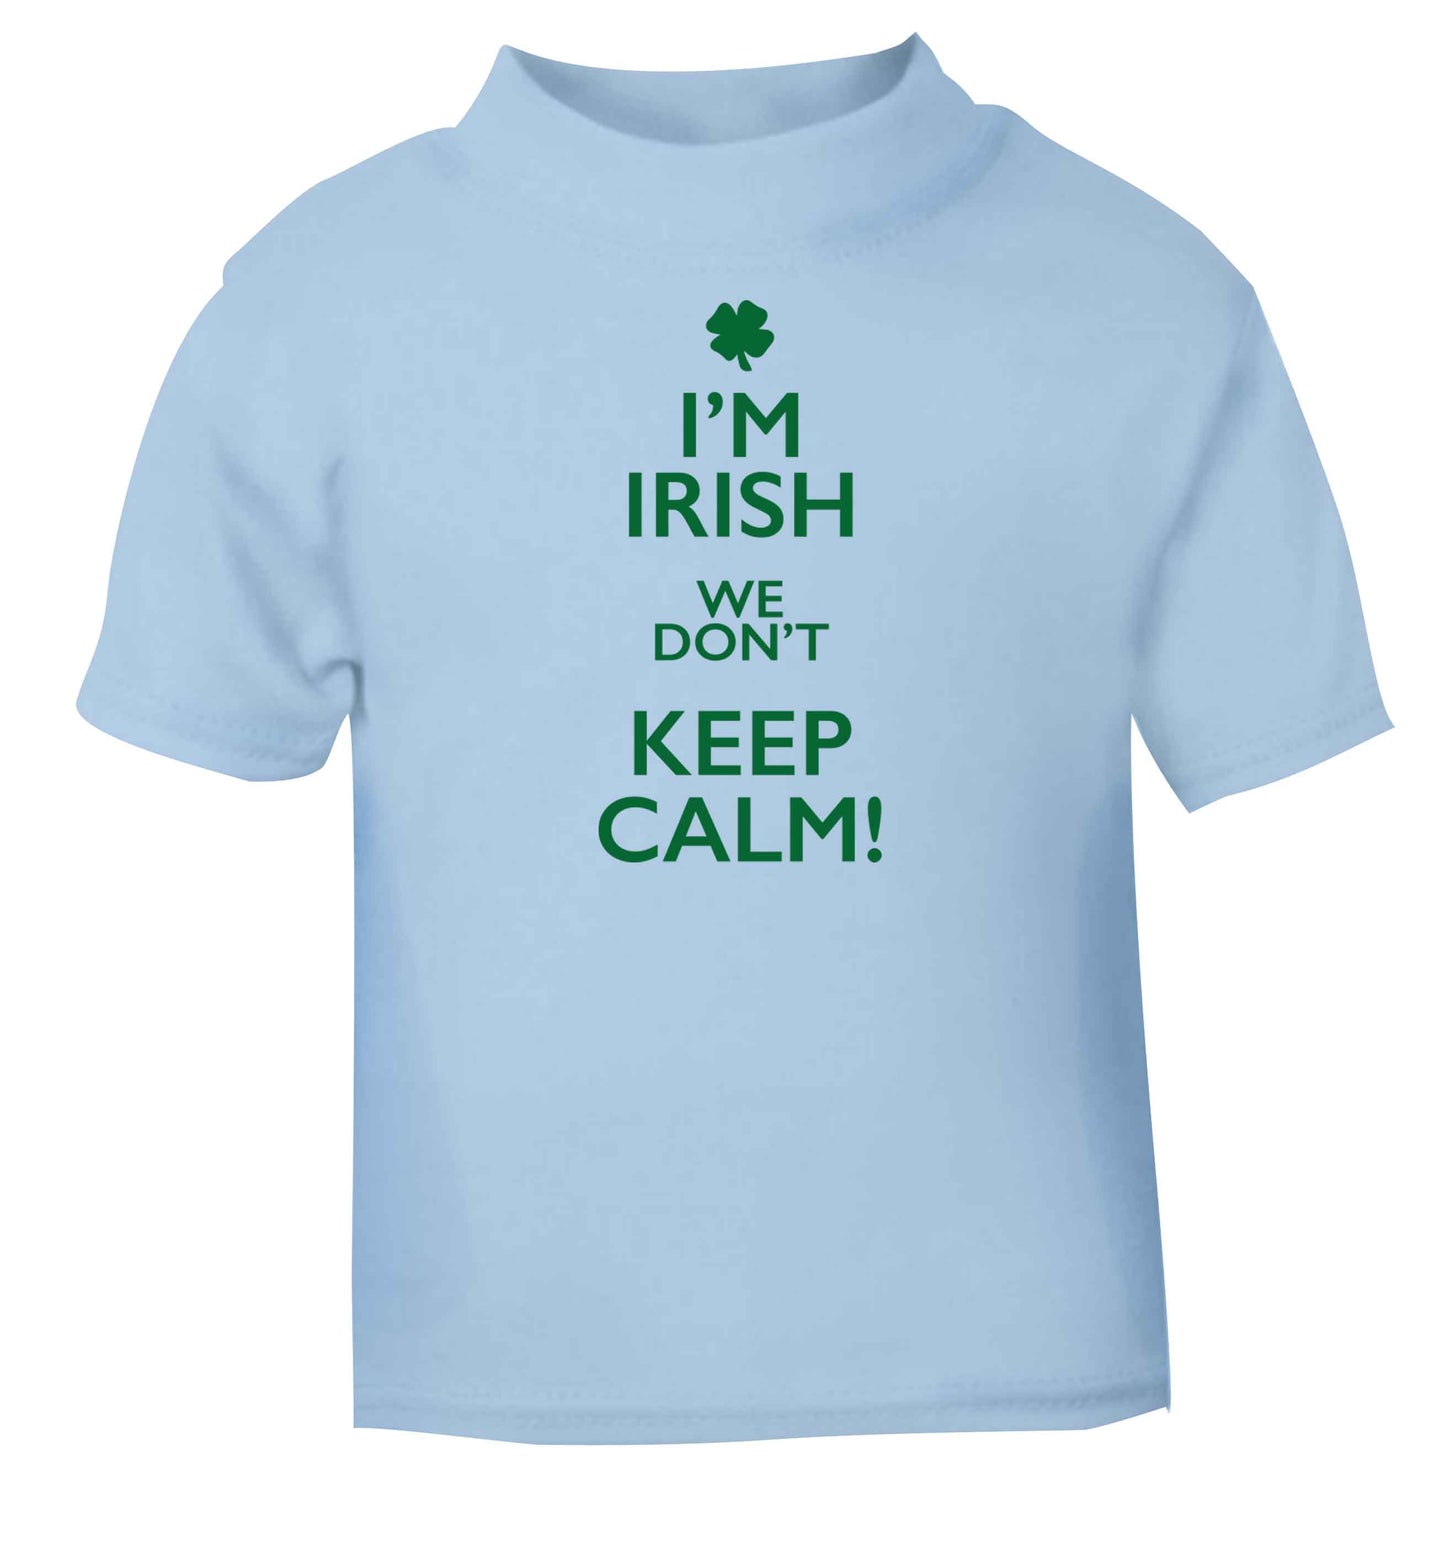 I'm Irish we don't keep calm light blue baby toddler Tshirt 2 Years